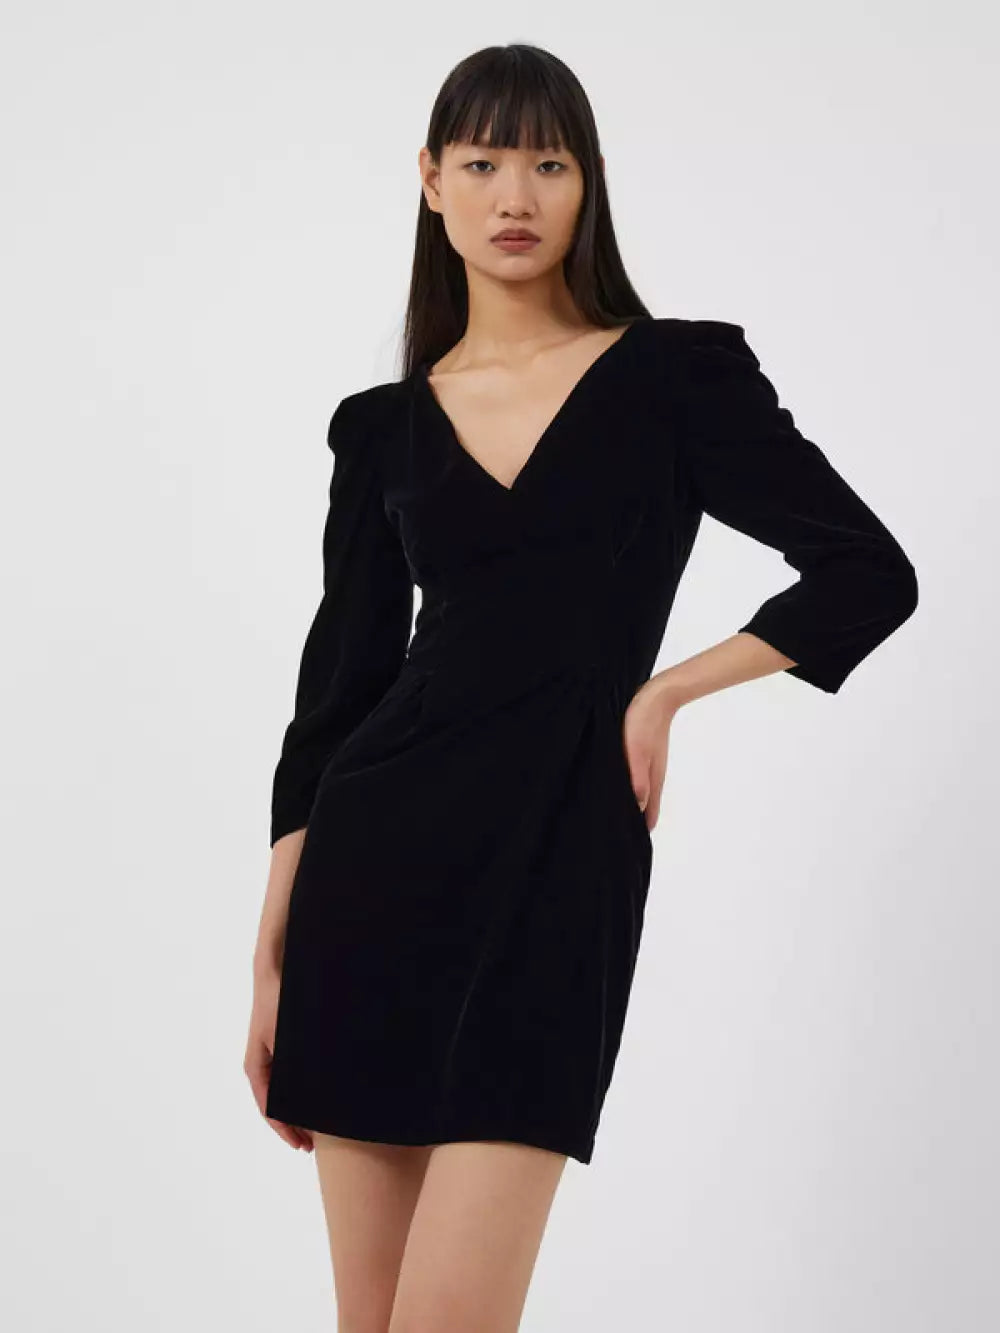 French Connection Ilavia Velvet Short Dress product image